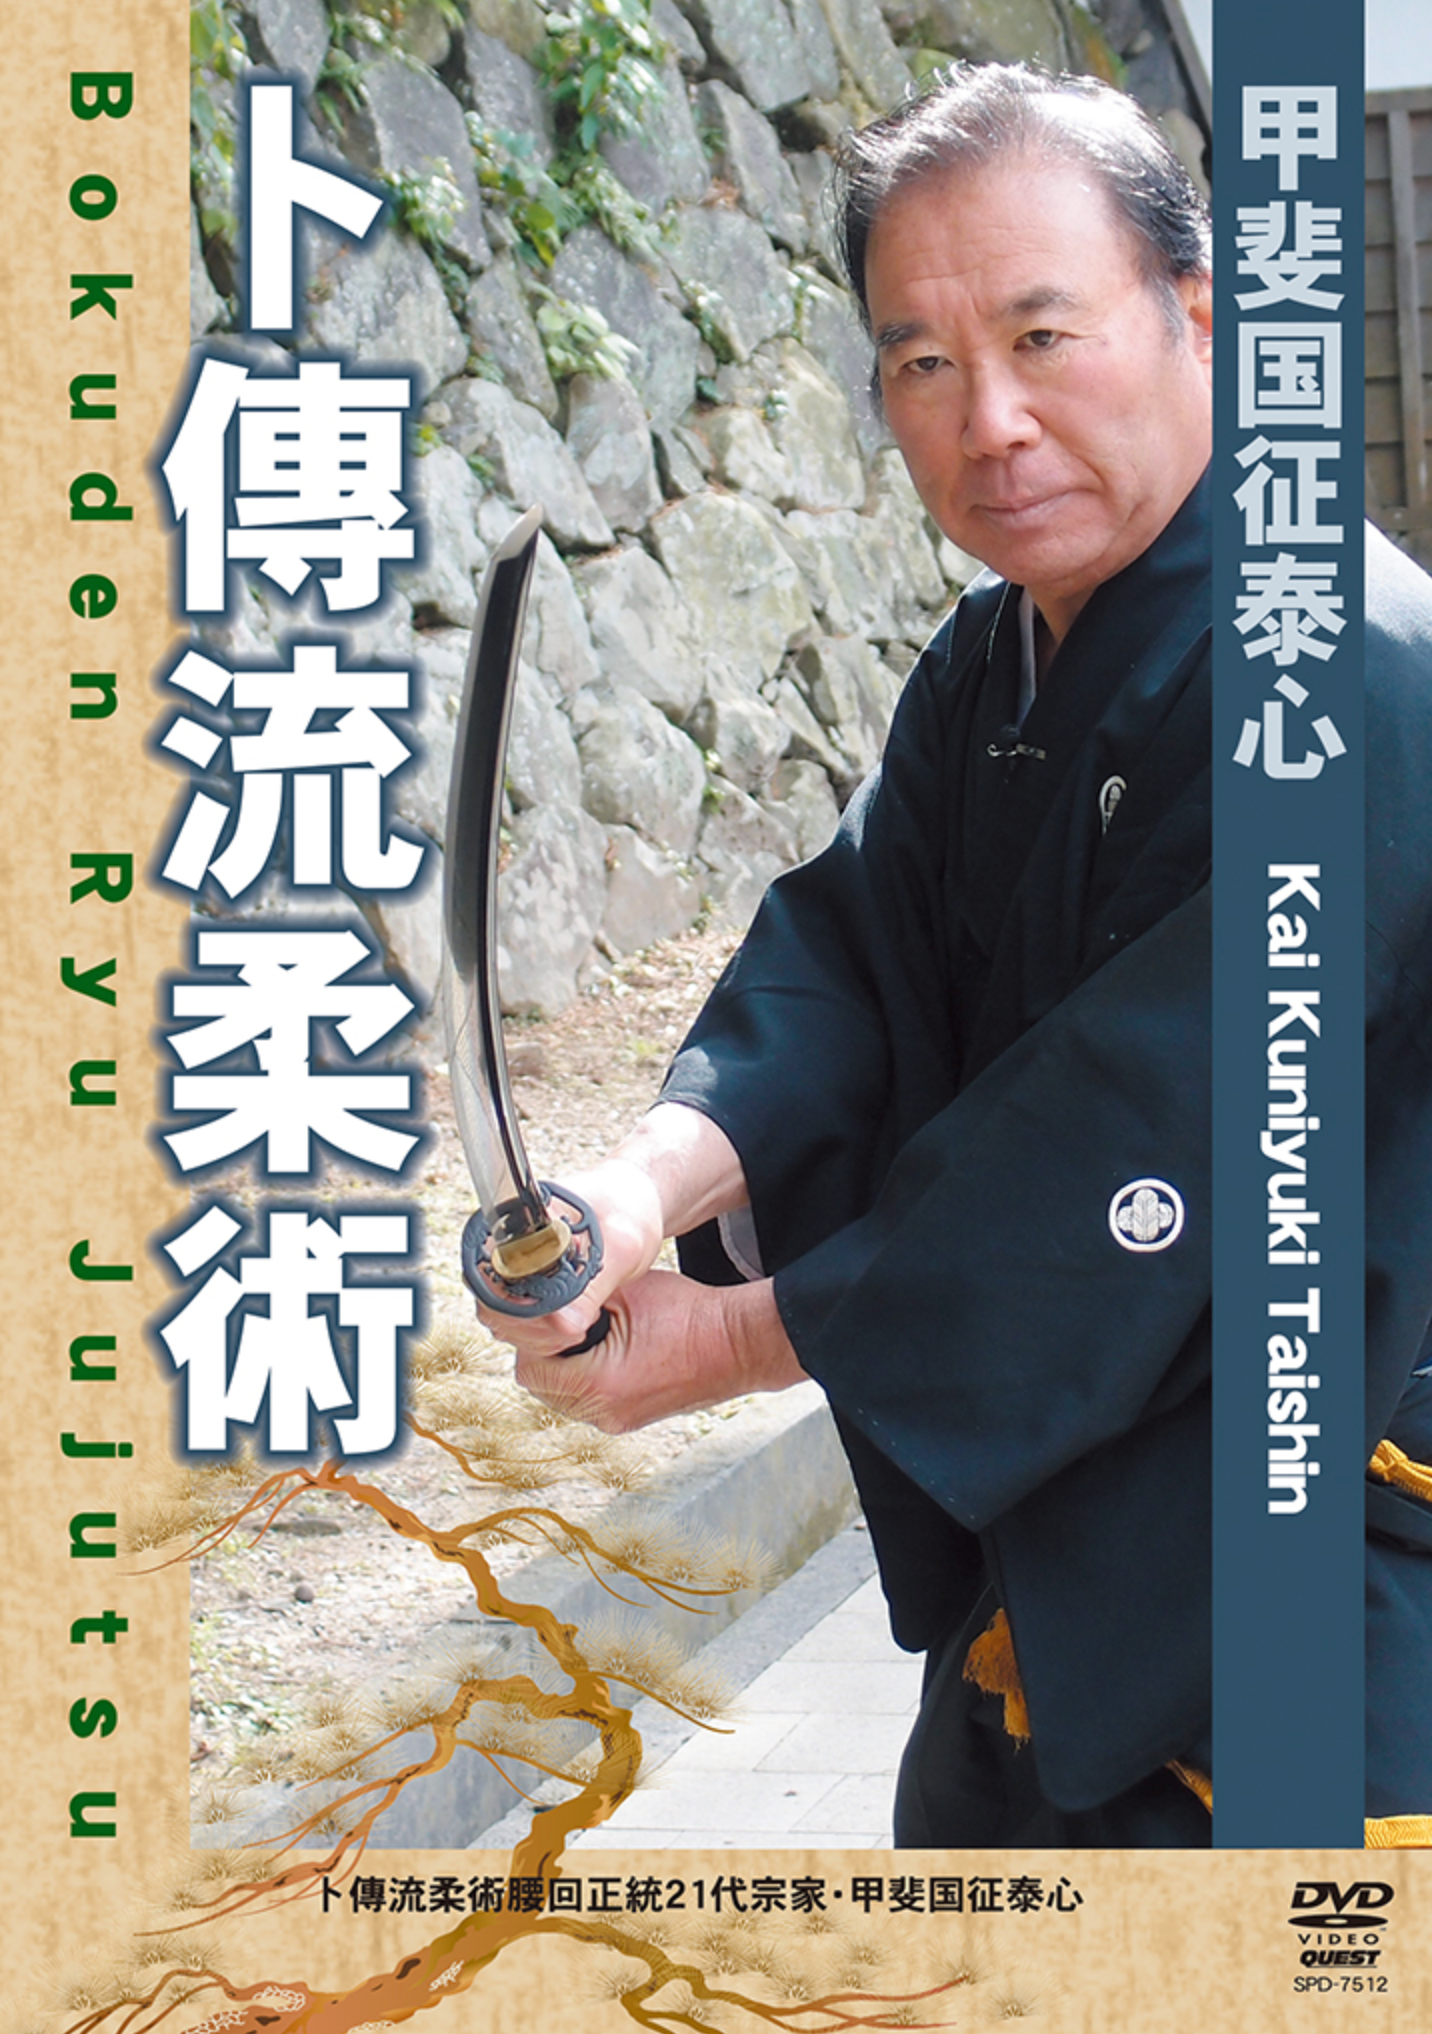 Bokuden Ryu Jujutsu DVD with Kuniyuki Kai - Budovideos Inc